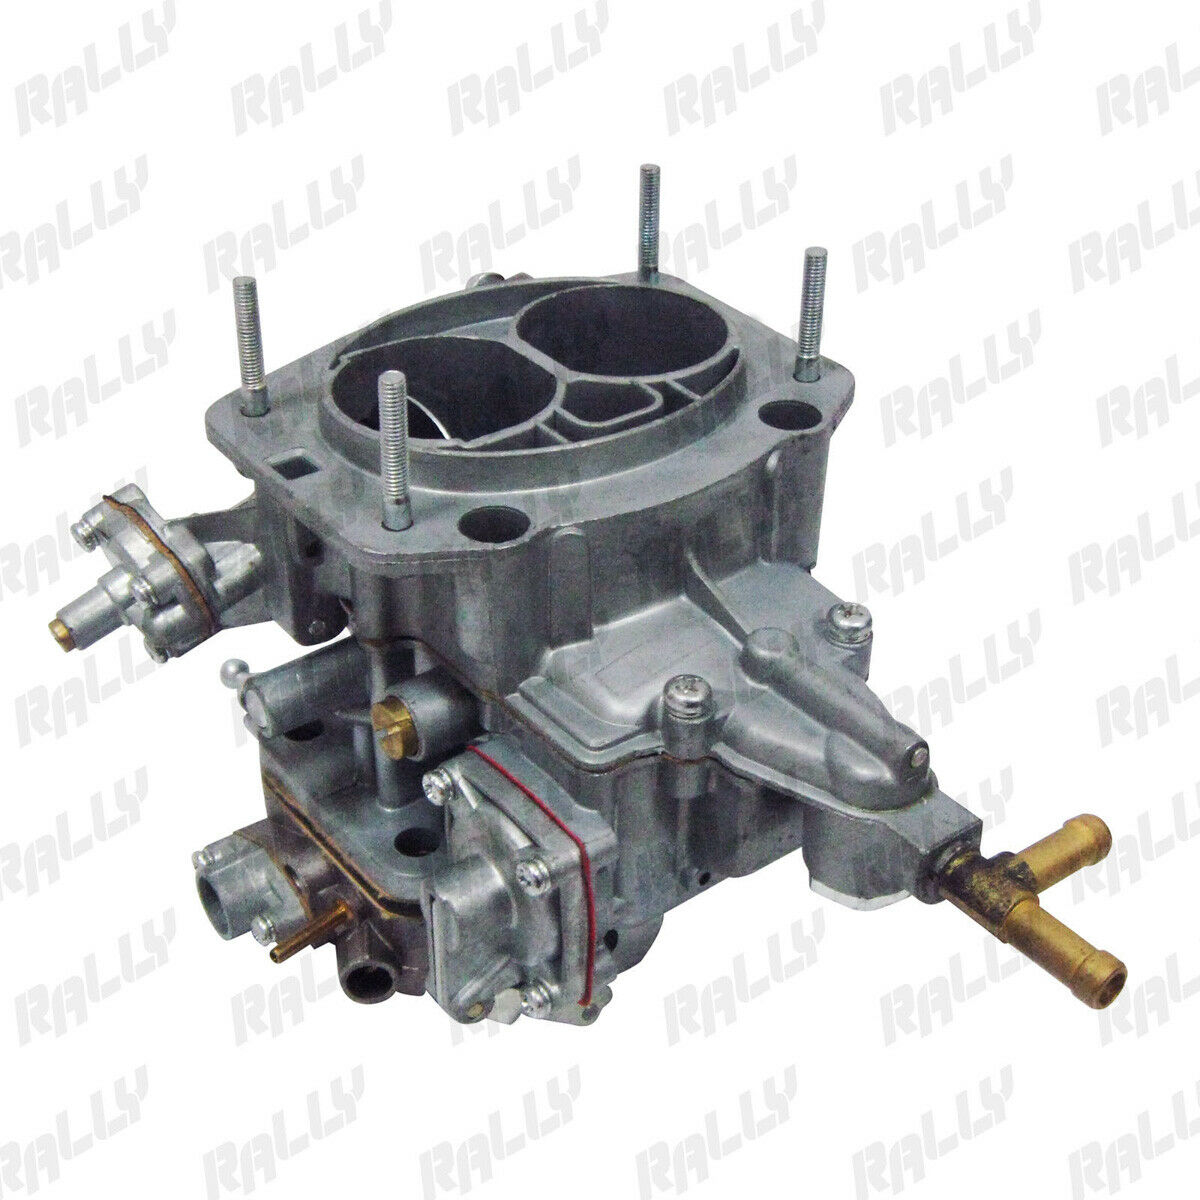 Carburetor 32X36 For 2105 Lada Niva Fiat Renault Monza Corcel Fiat 4 Cyl (551)